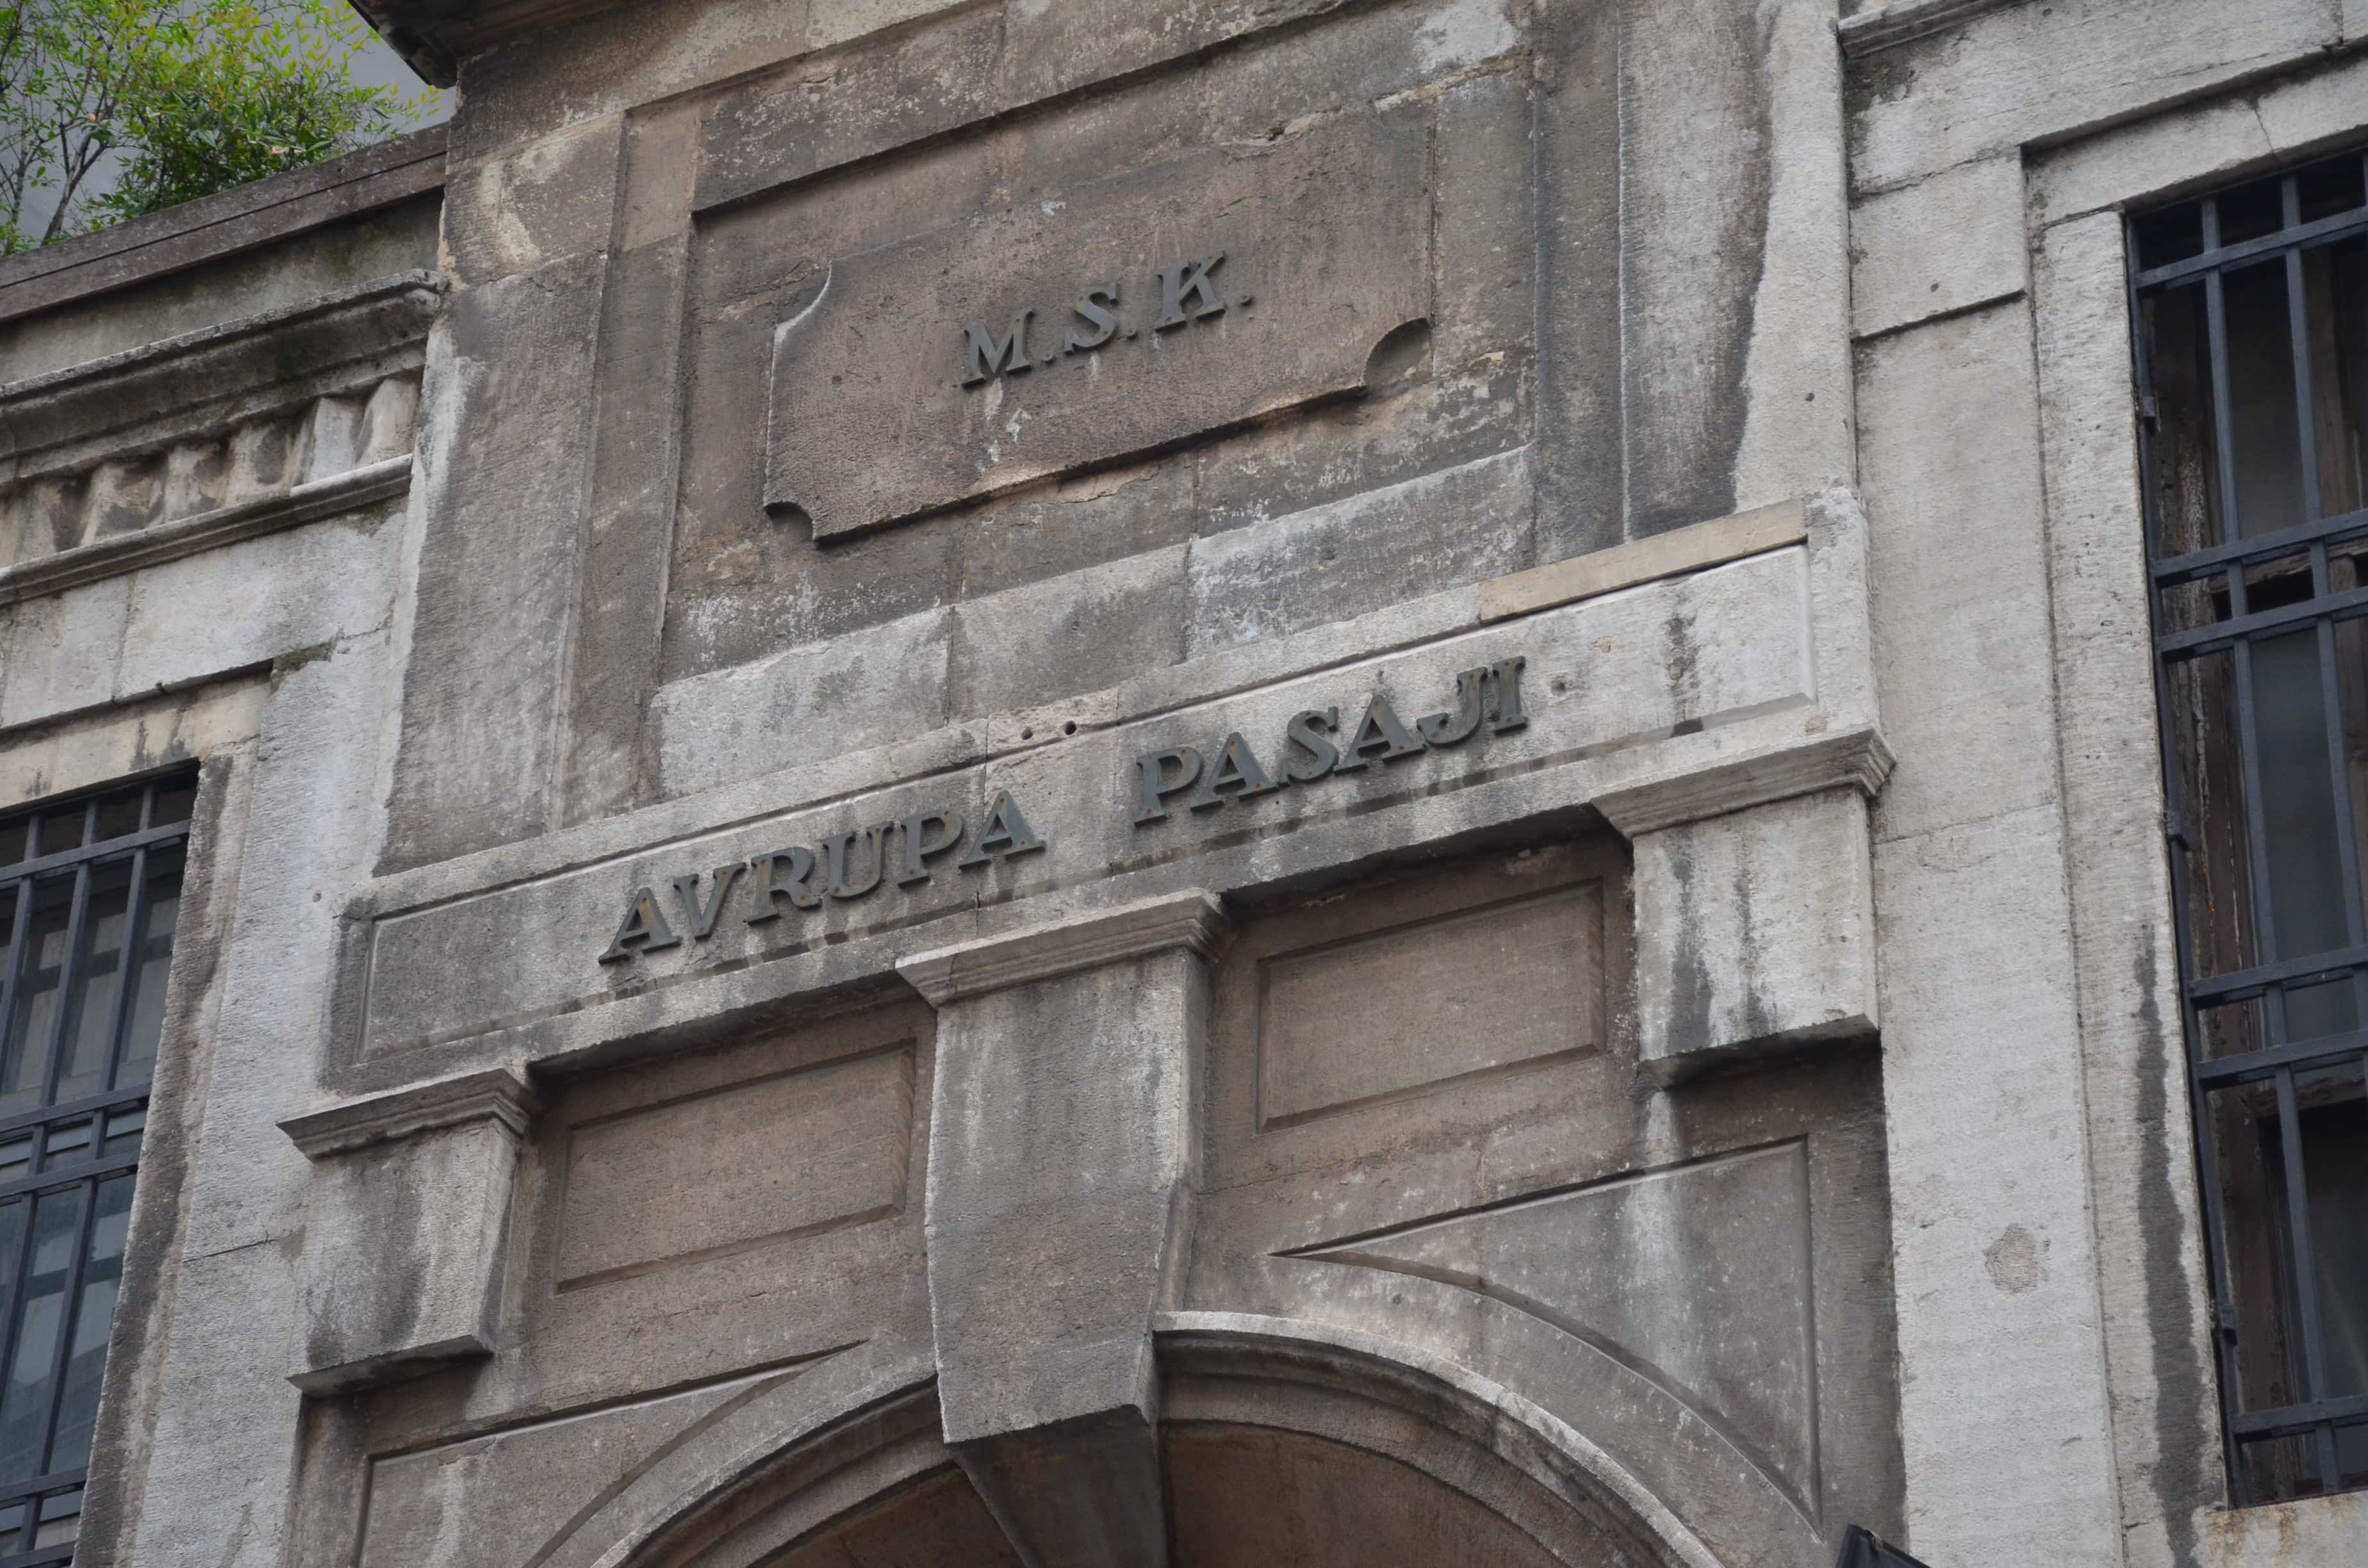 Inscription above the entrance to European Passage on Meşrutiyet Street